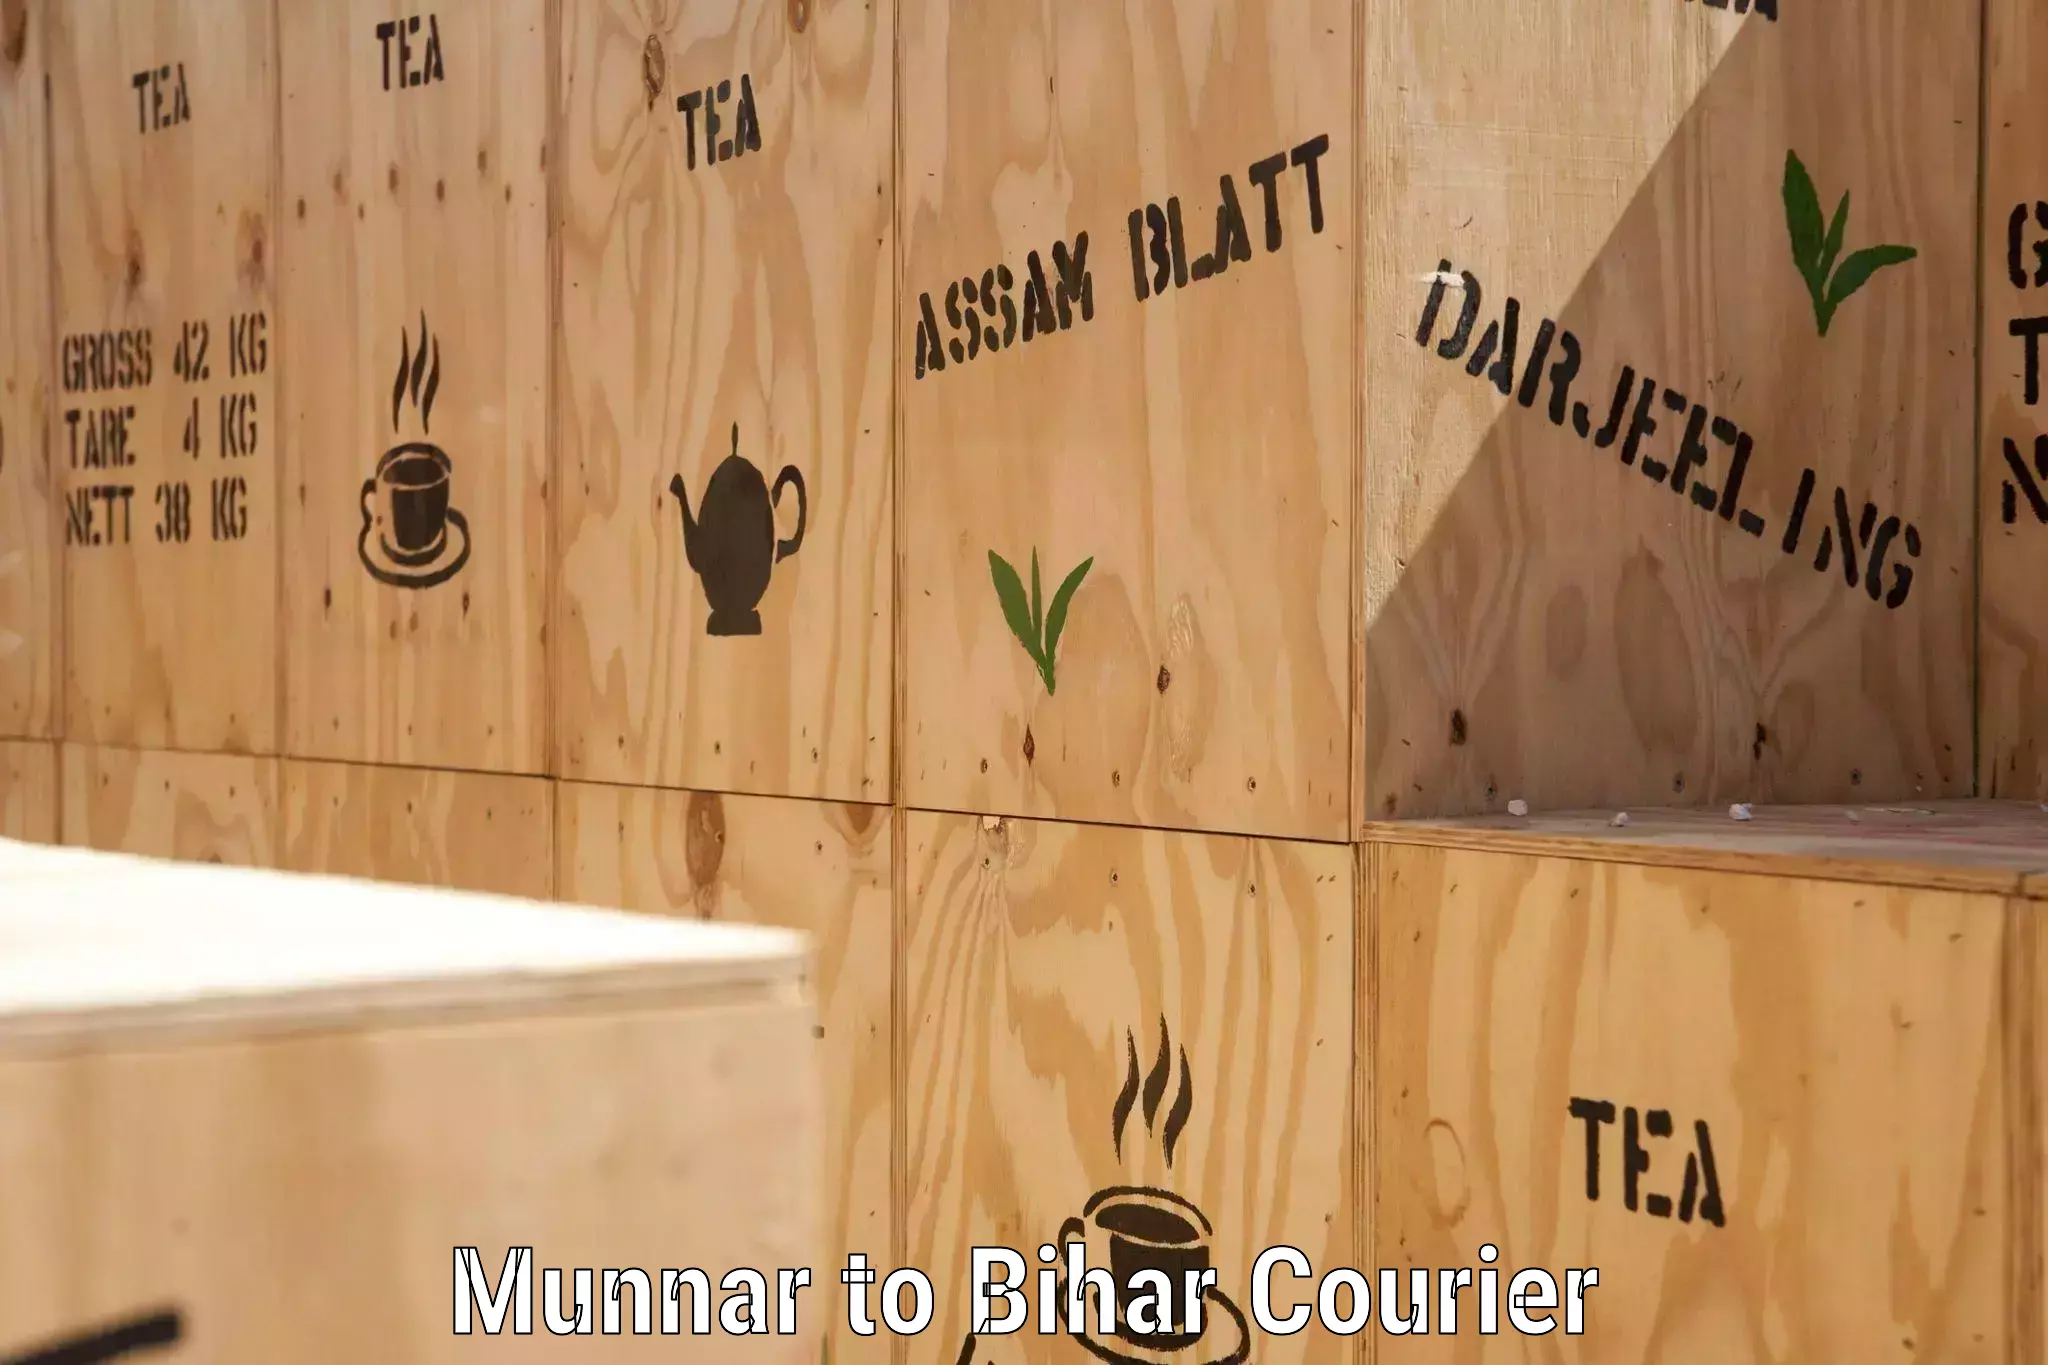 Sustainable delivery practices Munnar to Mahnar Bazar